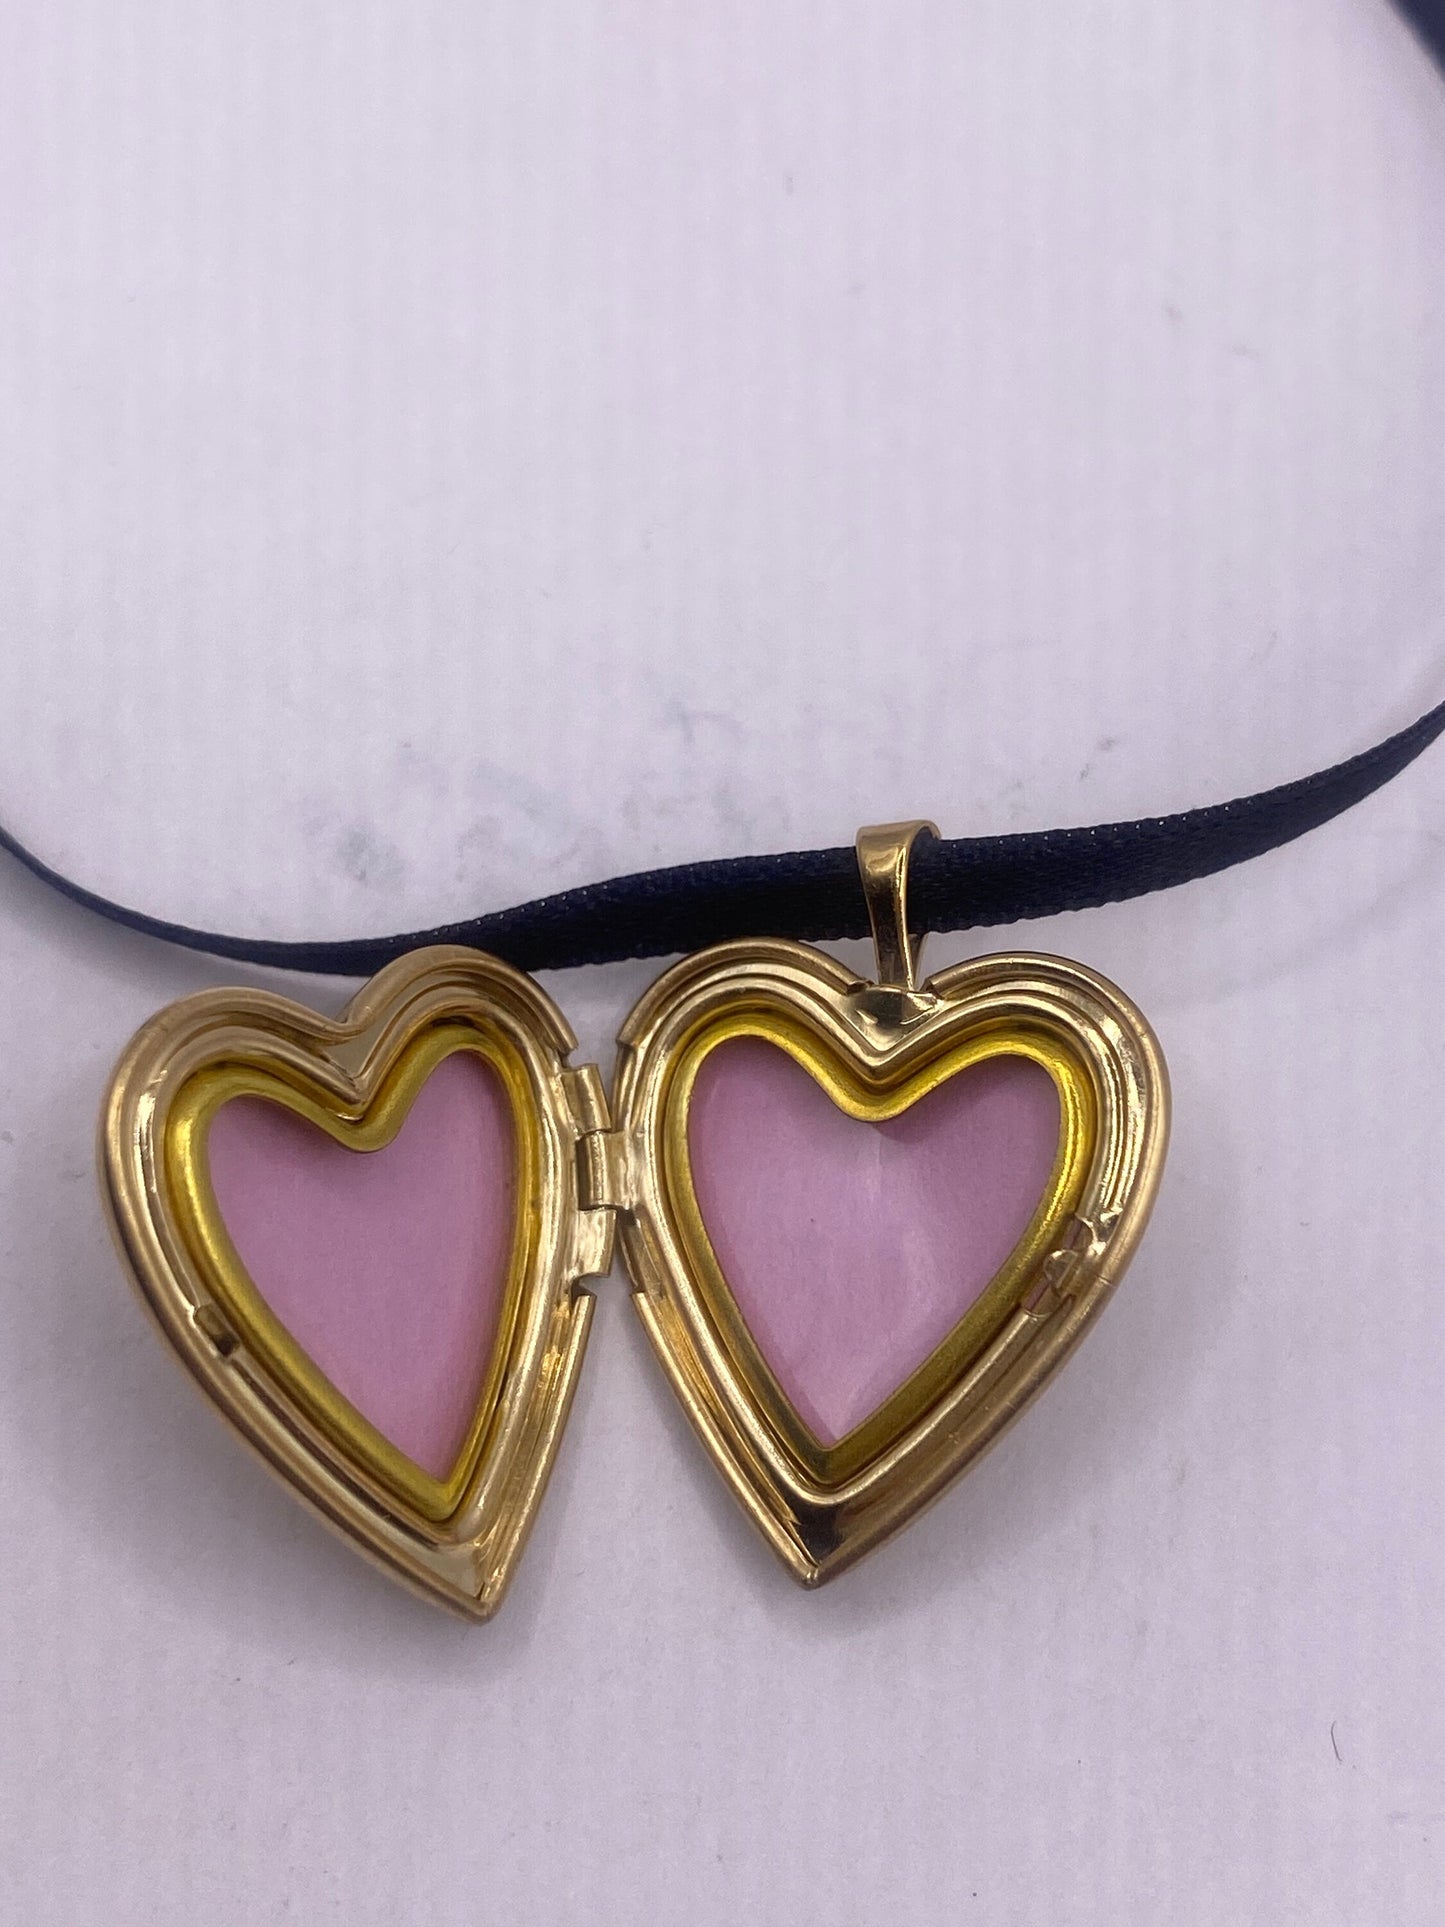 Vintage Gold Locket | Tiny Heart 9k Gold Filled Pendant Photo Memory Charm Engraved Teardrops | Choker Necklace